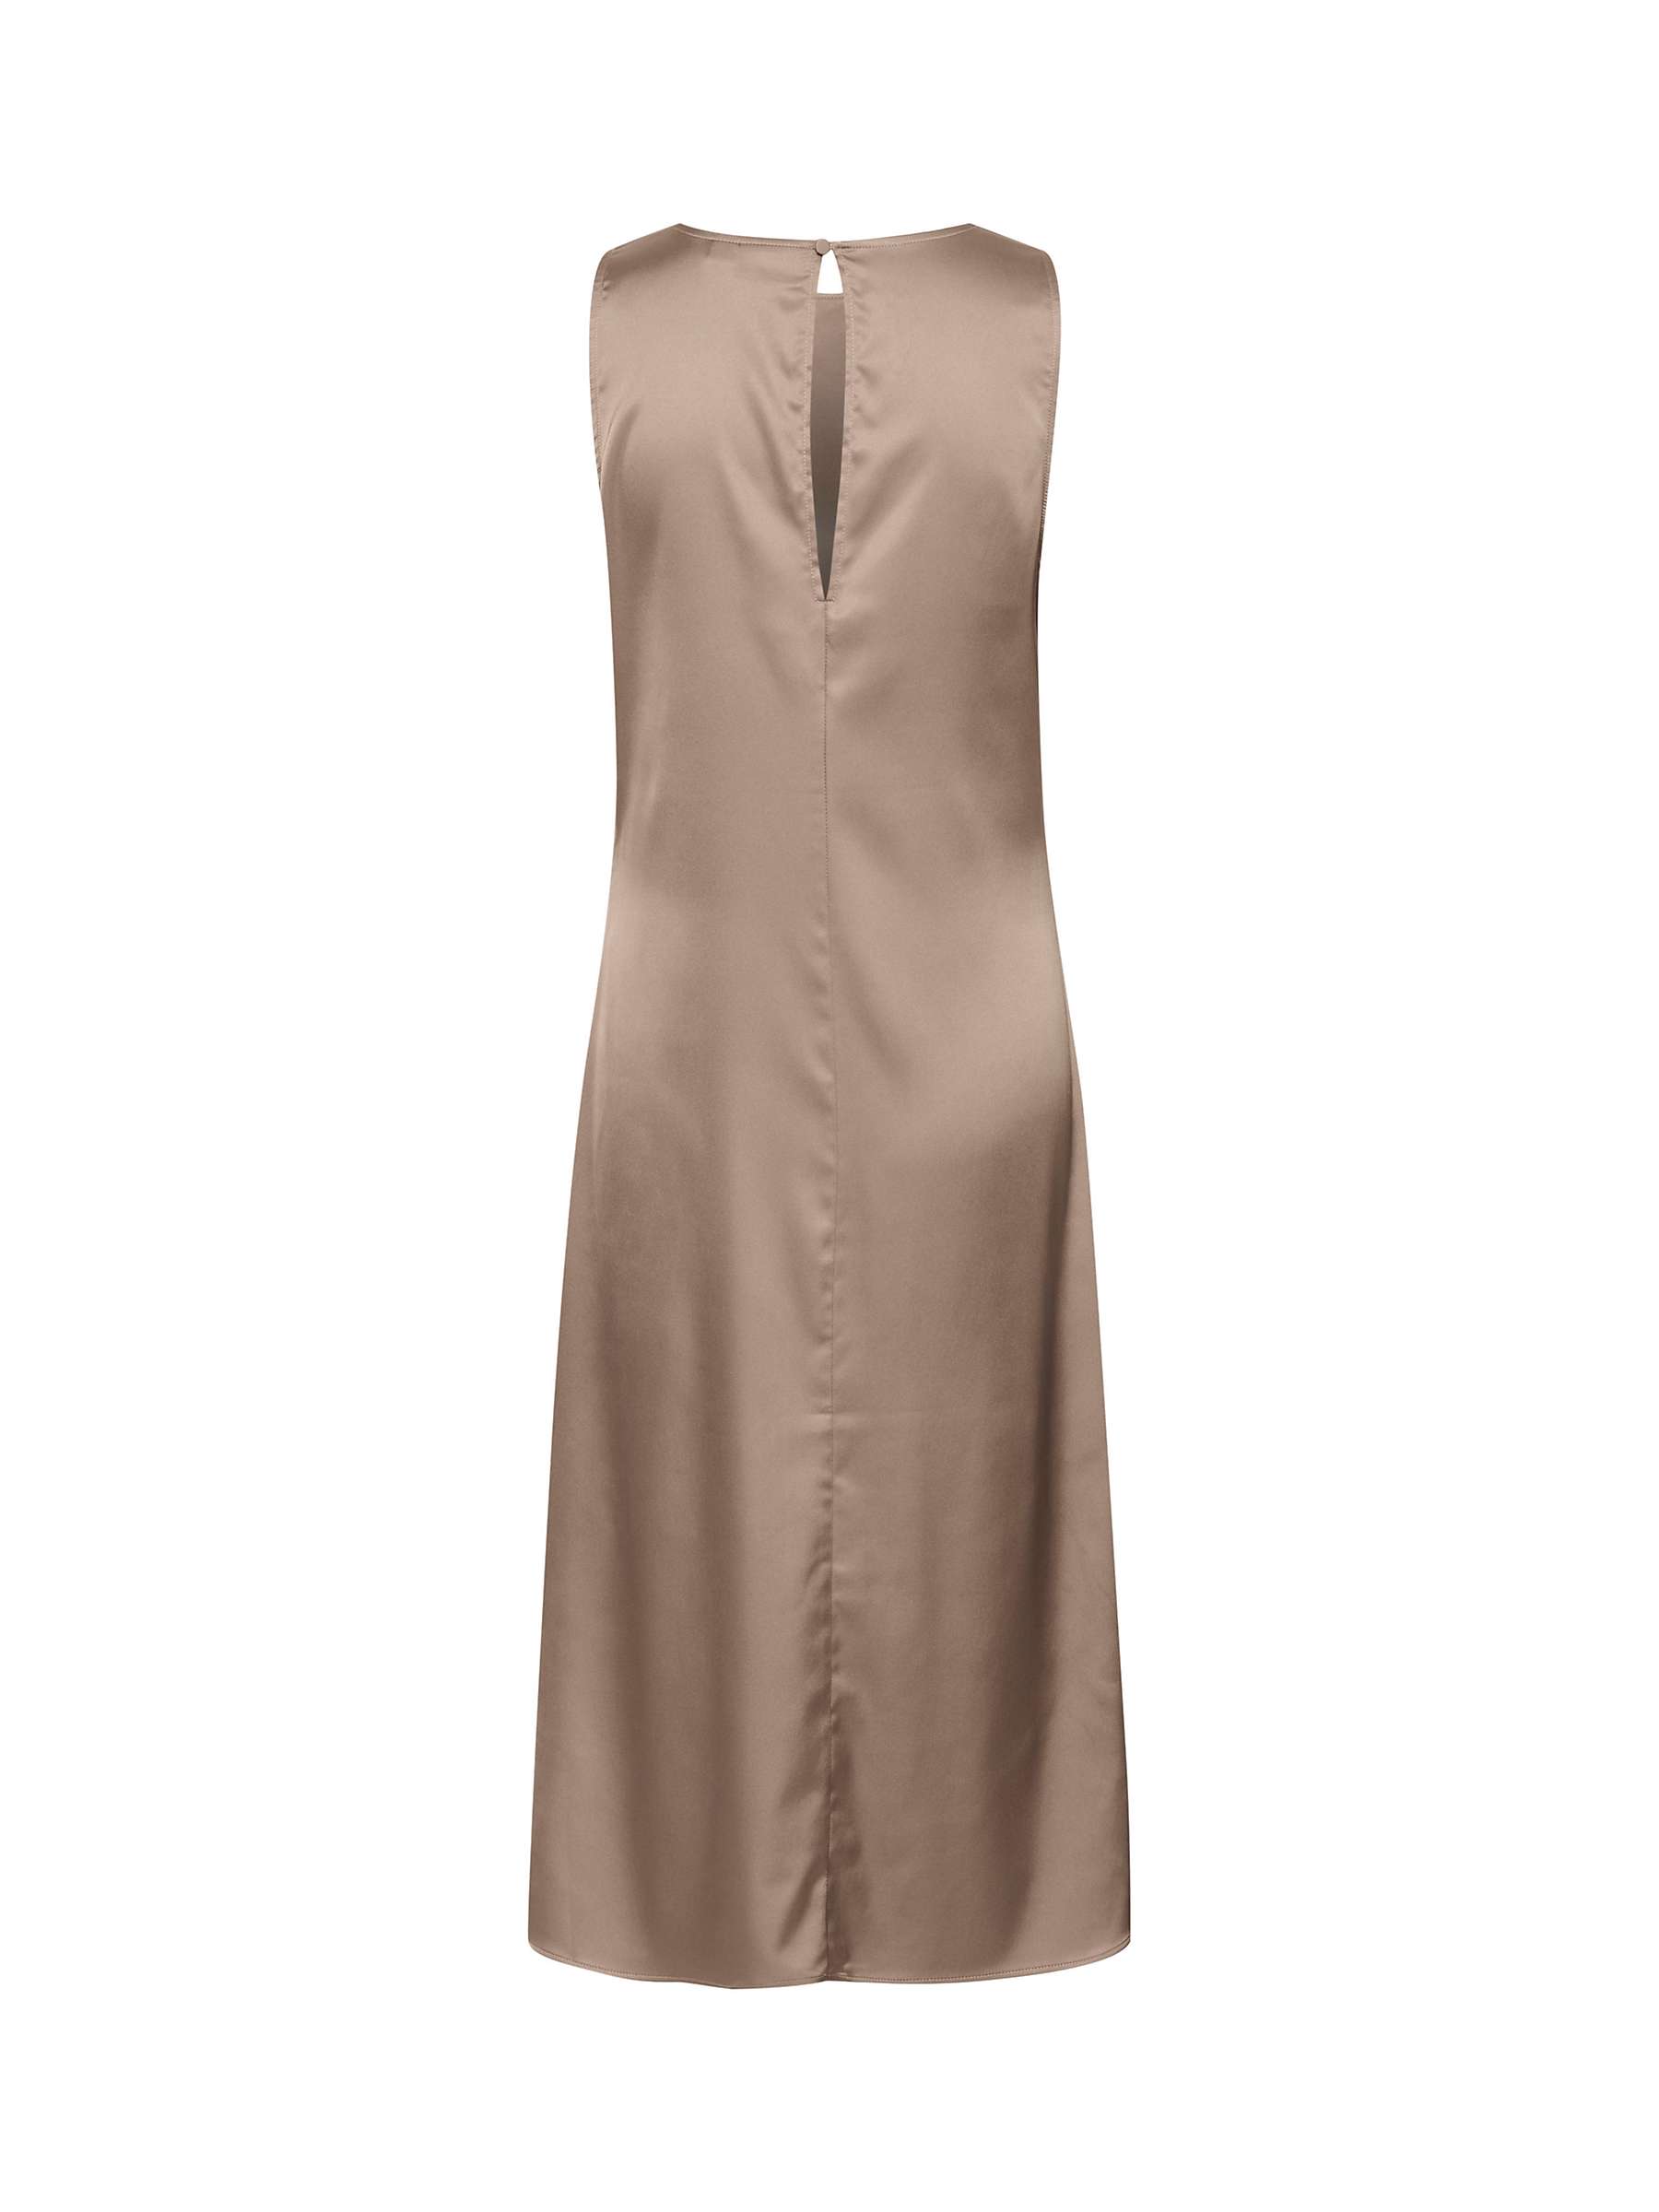 Buy Saint Tropez Disa Sleeveless Dress, Dune Online at johnlewis.com